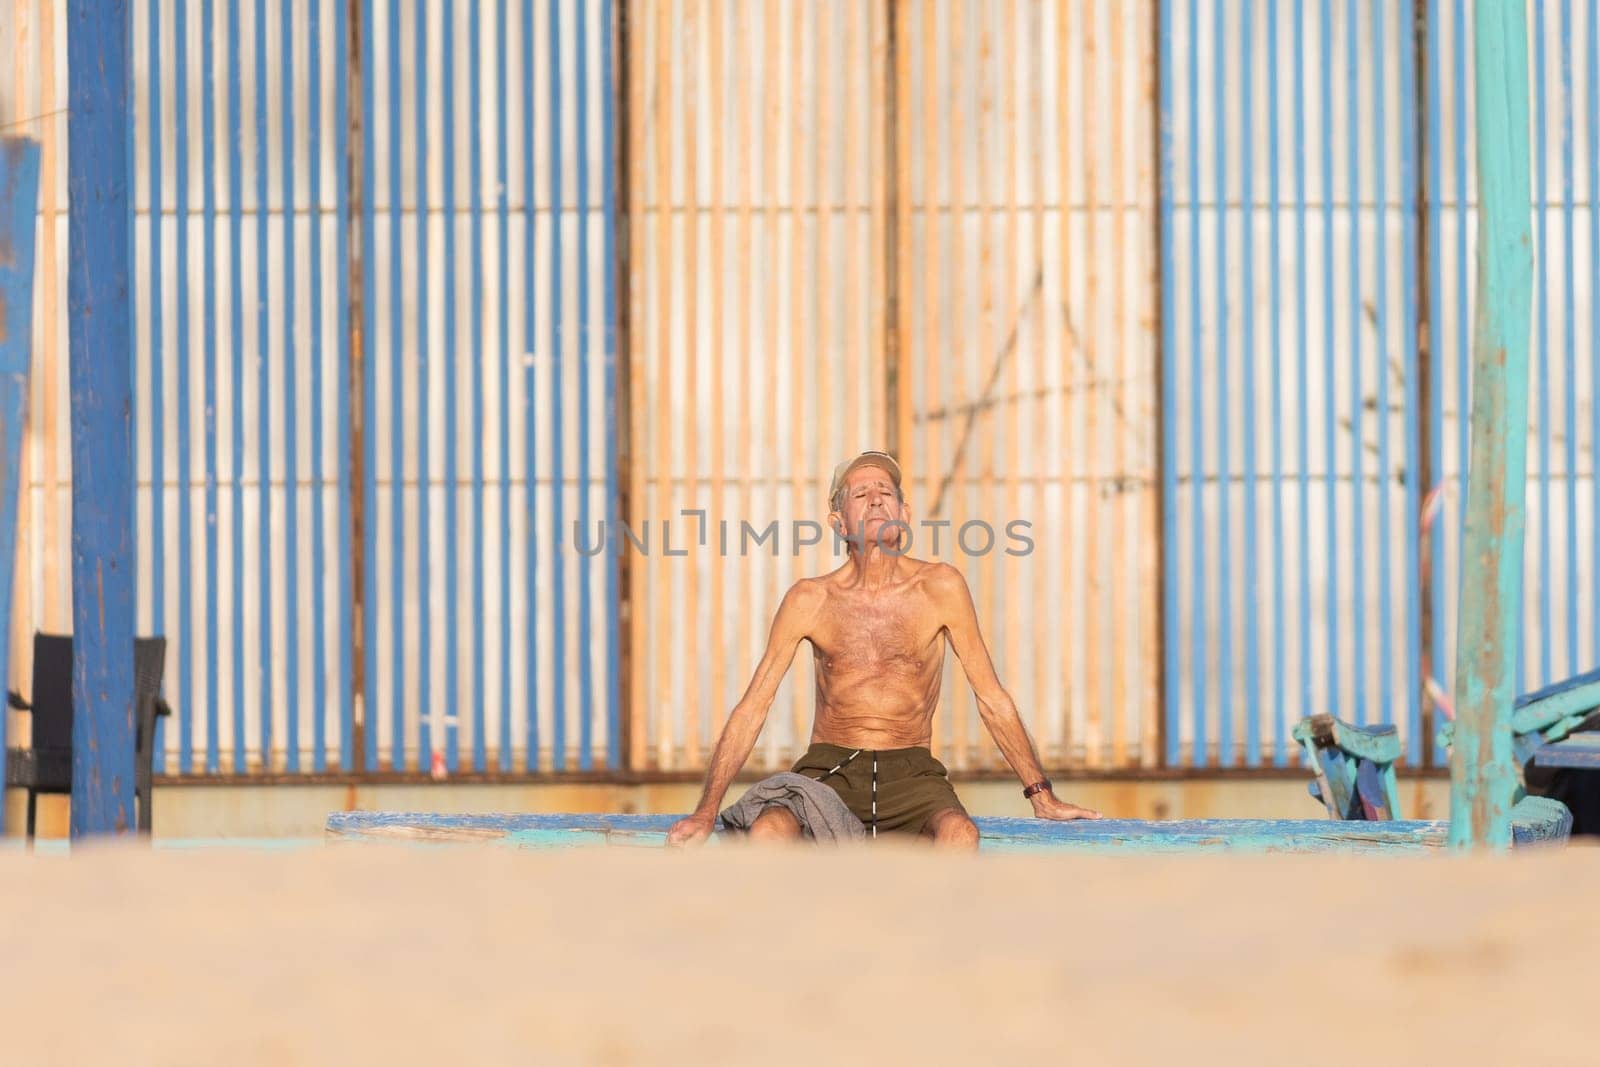 25 november 2023, Lisbon, Portugal - Shirtless Man Sitting on Surfboard in Sandy Beach by Studia72